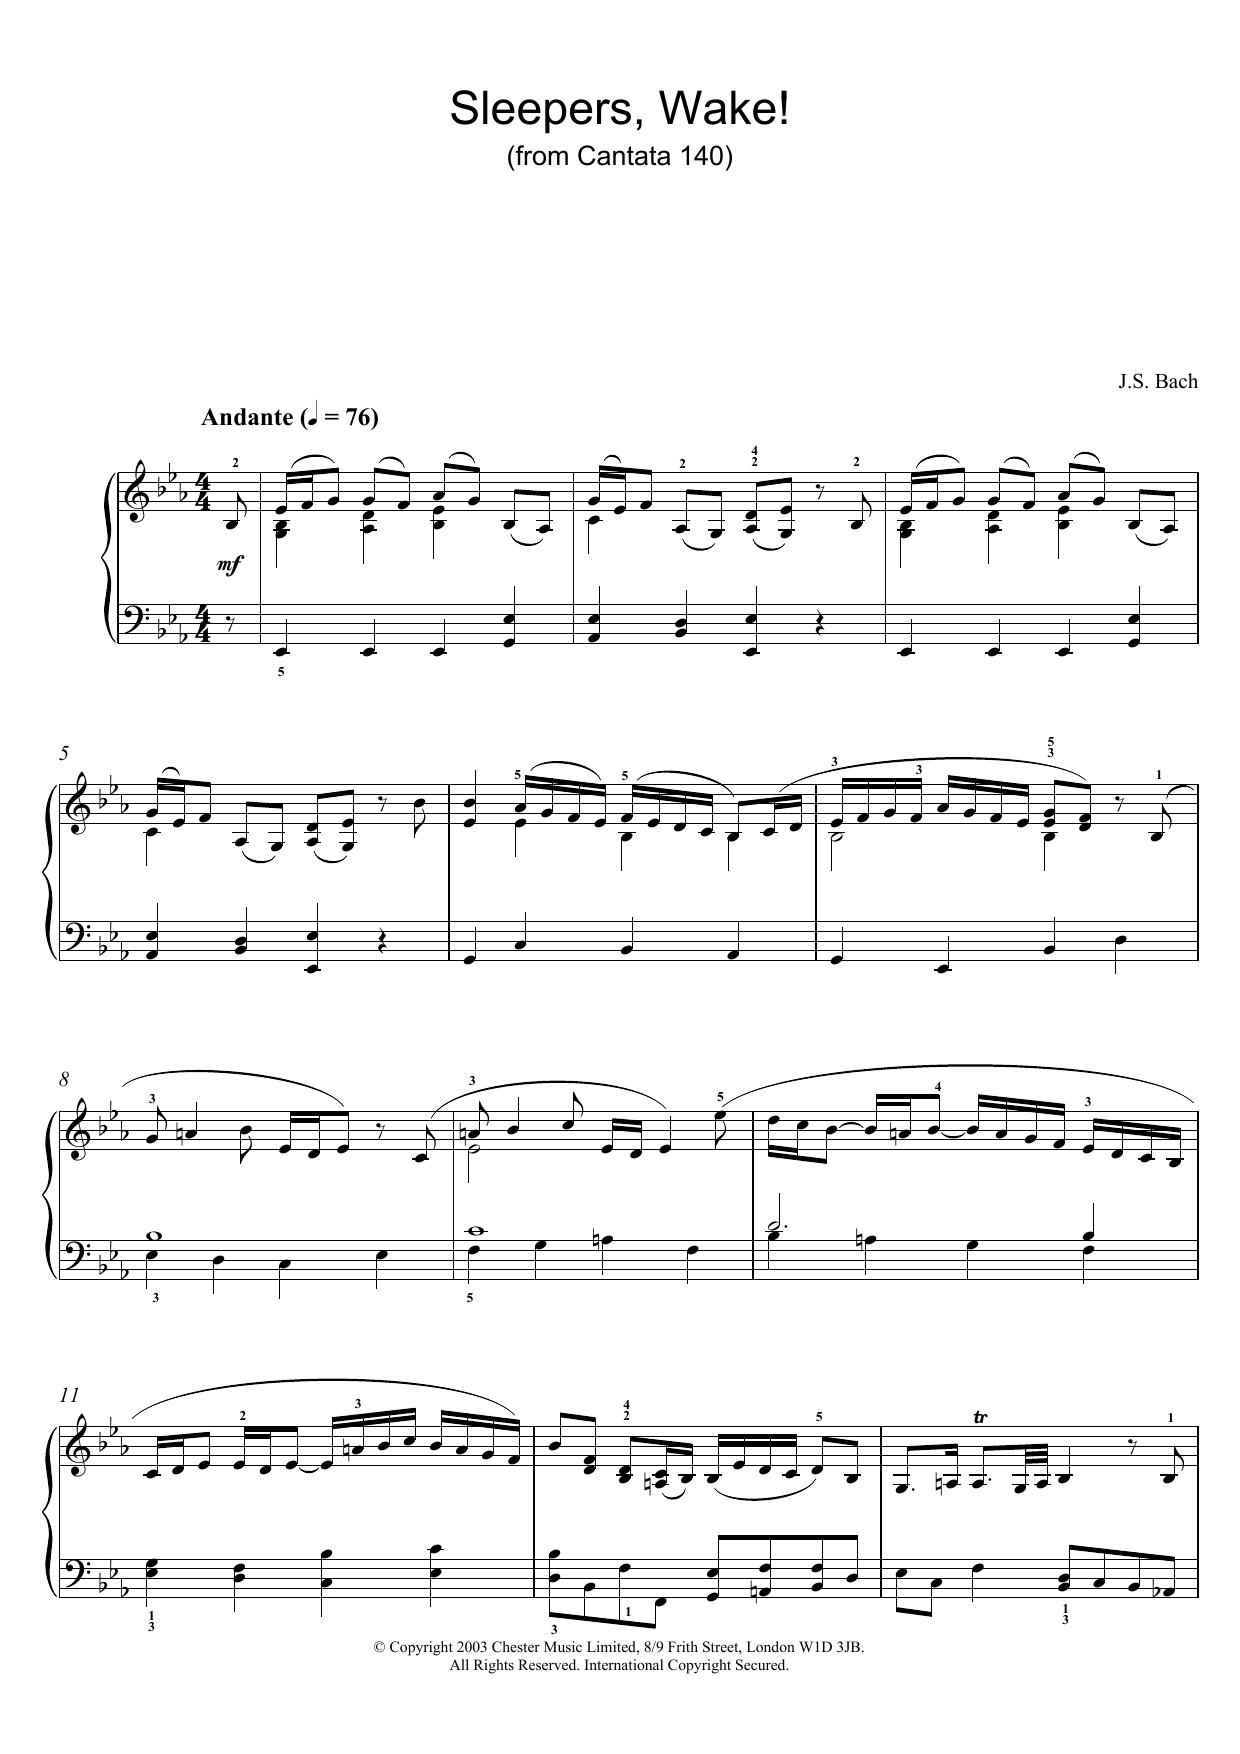 Johann Sebastian Bach Sleepers, Wake! (from Cantata 140) Sheet Music Notes & Chords for Piano - Download or Print PDF